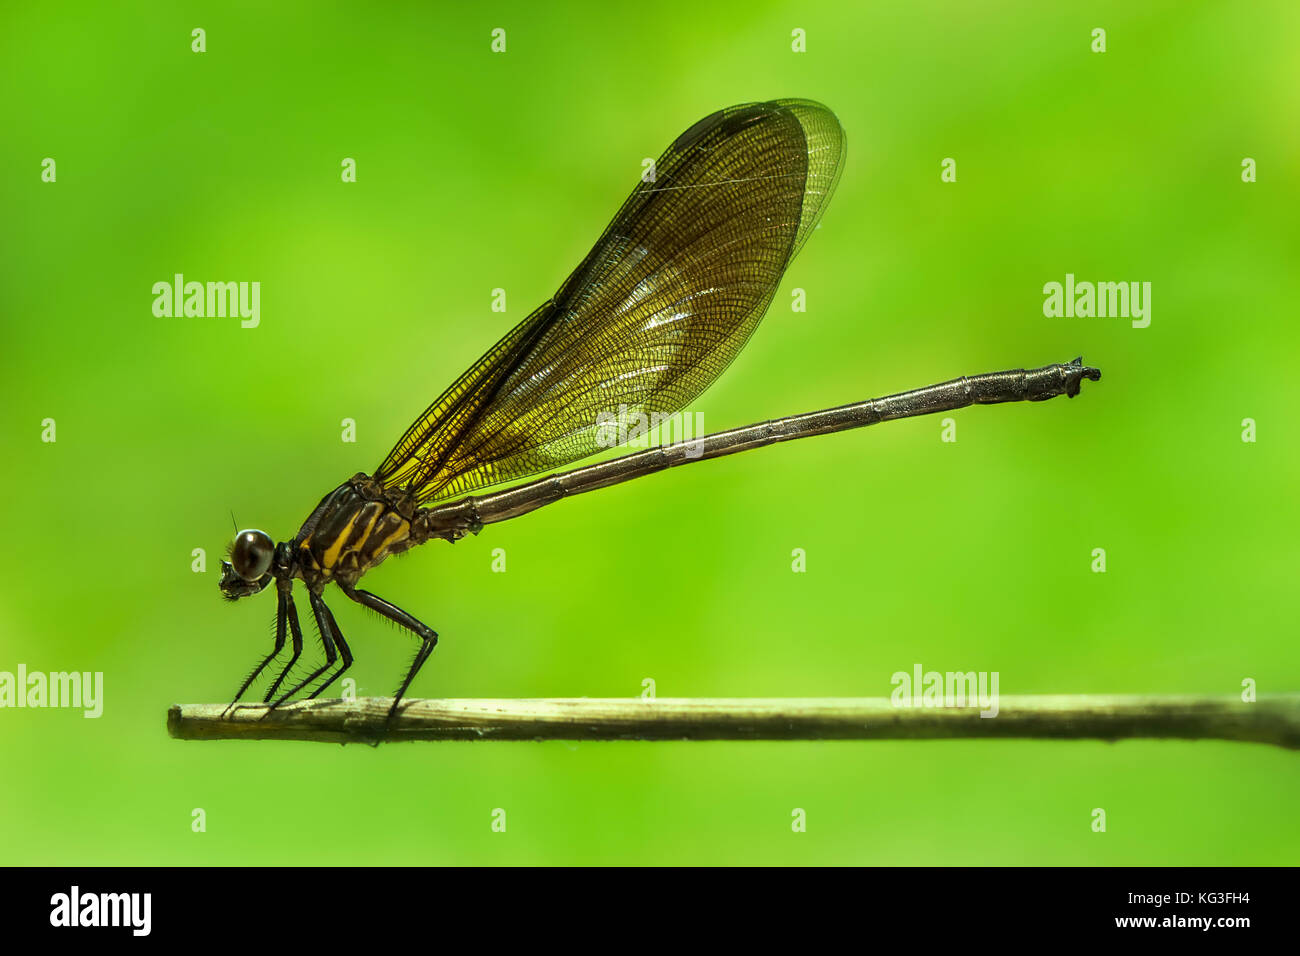 Green Yellowish Dragonfly/Damselfly/Zygoptera perches on bamboo stem Stock Photo